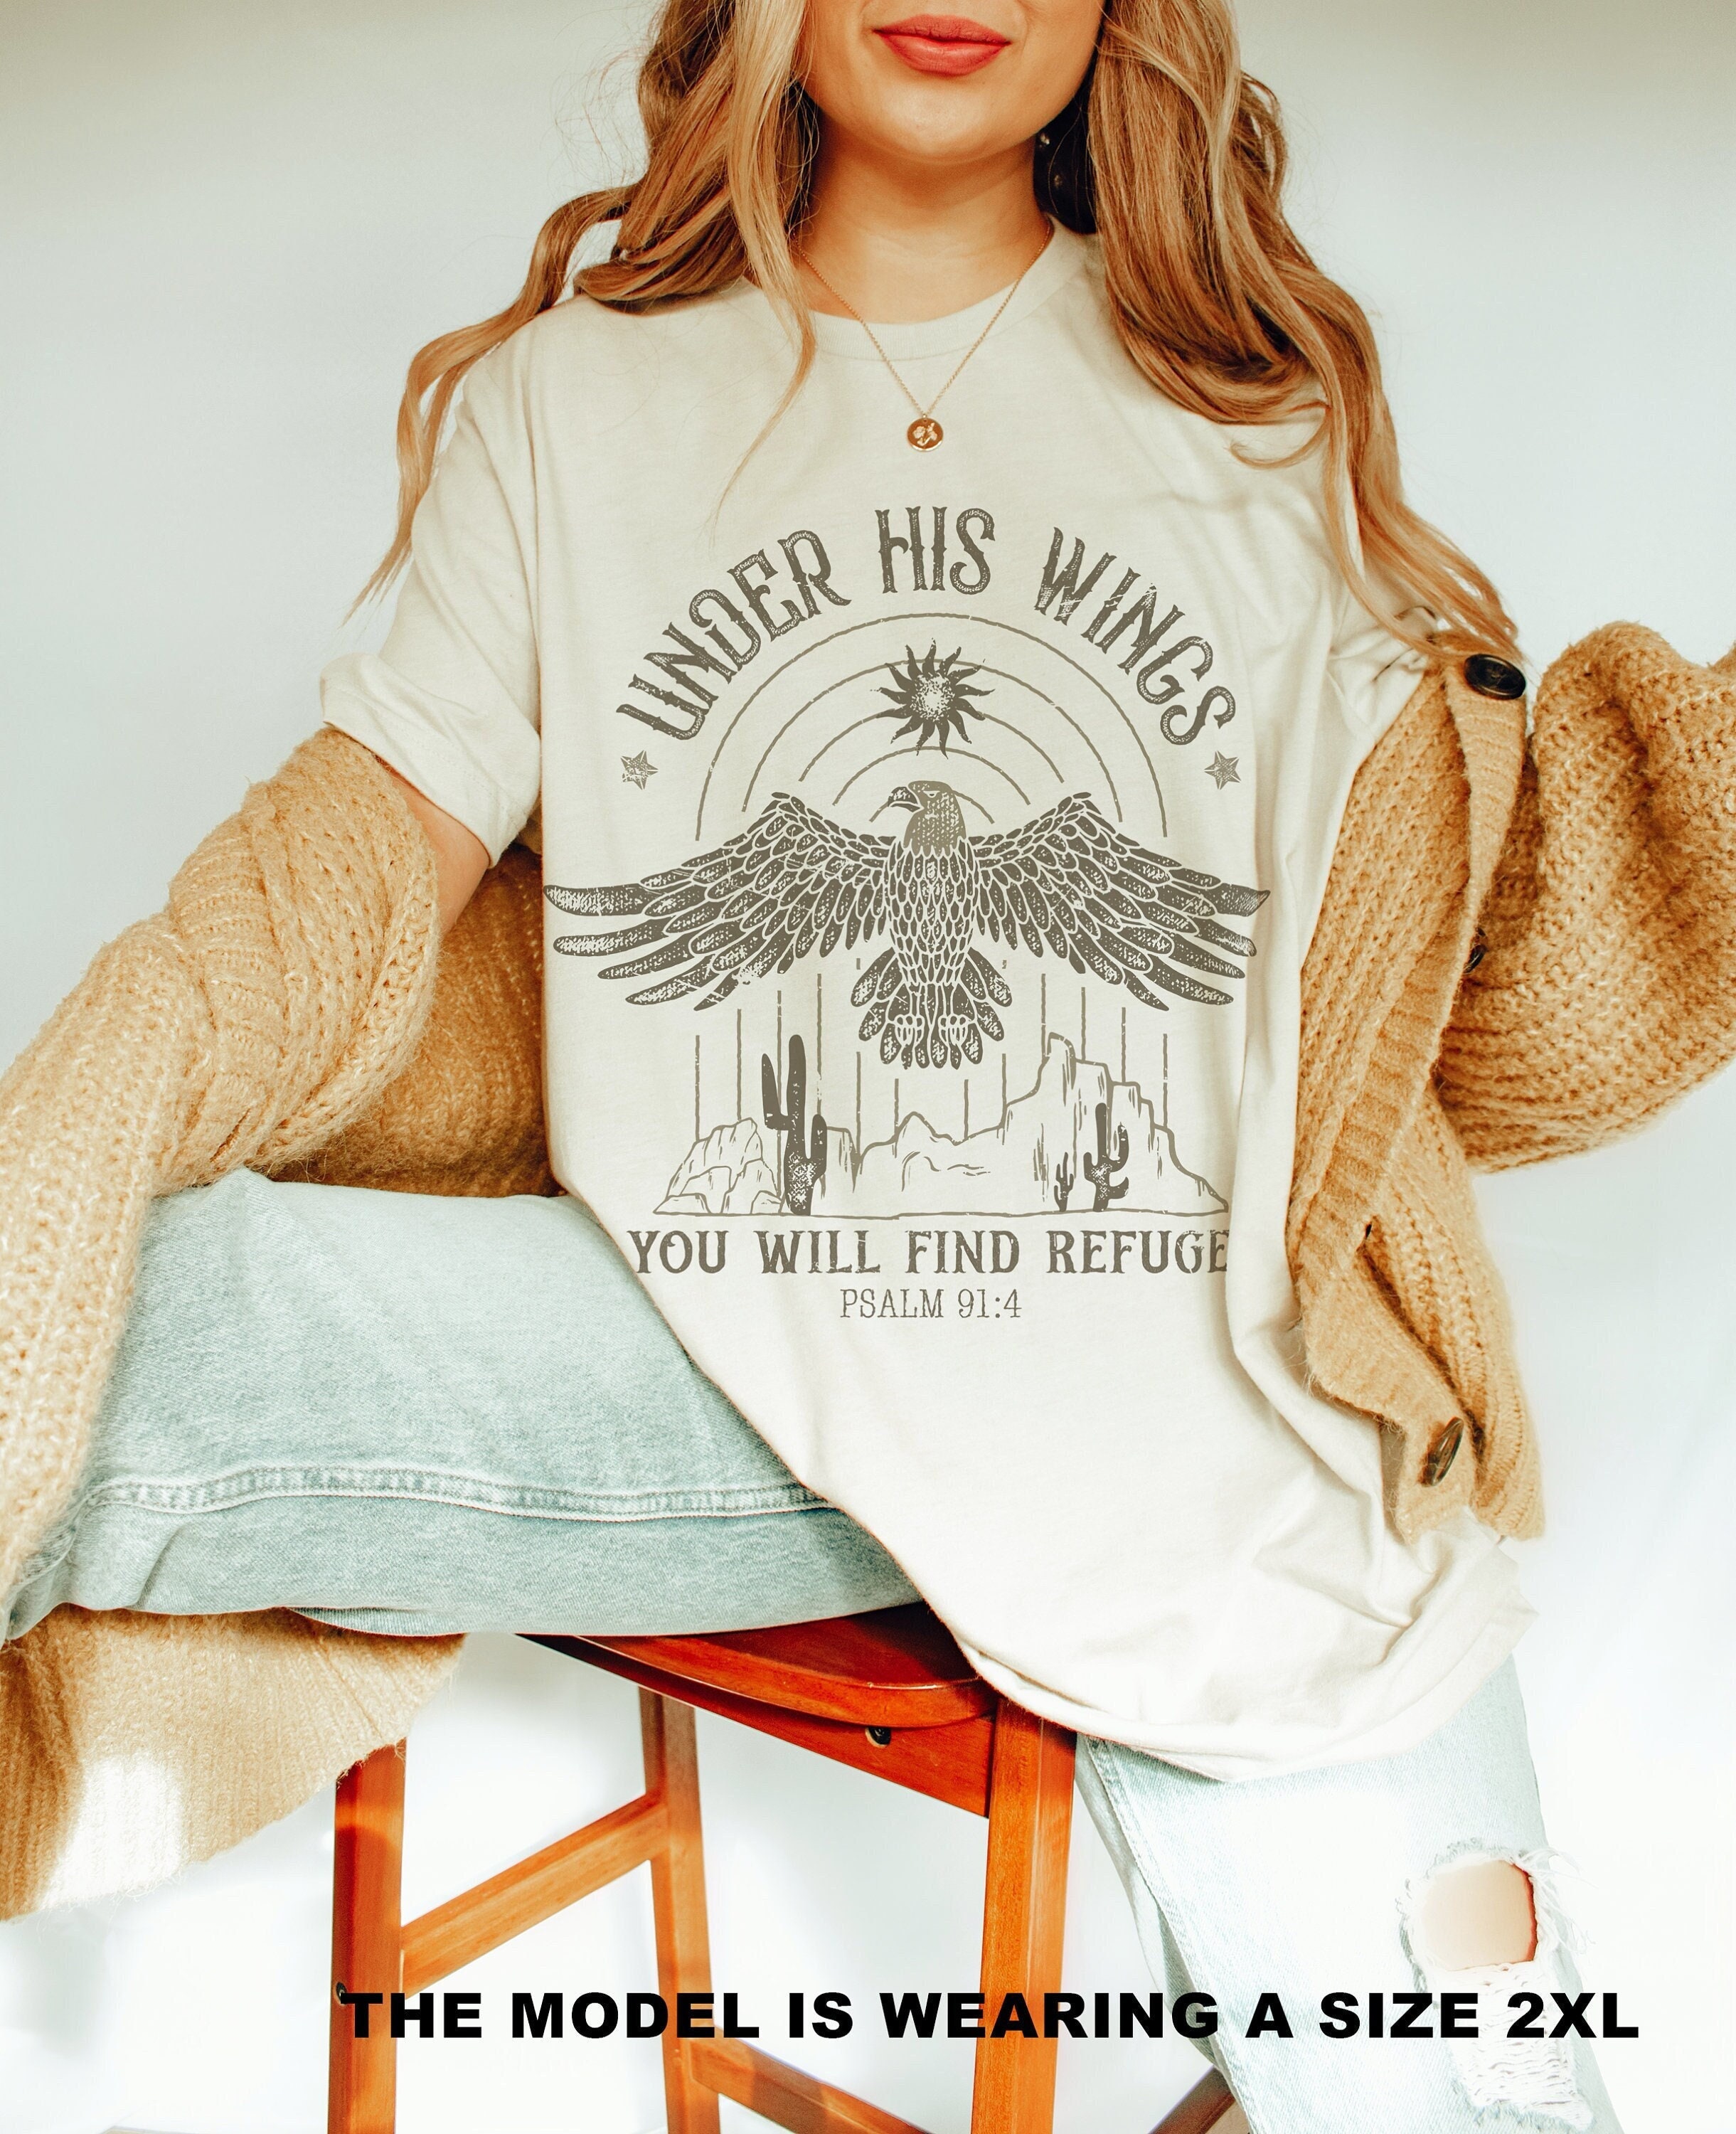 Christian graphic tshirt - Bible verse - Trendy religious tee